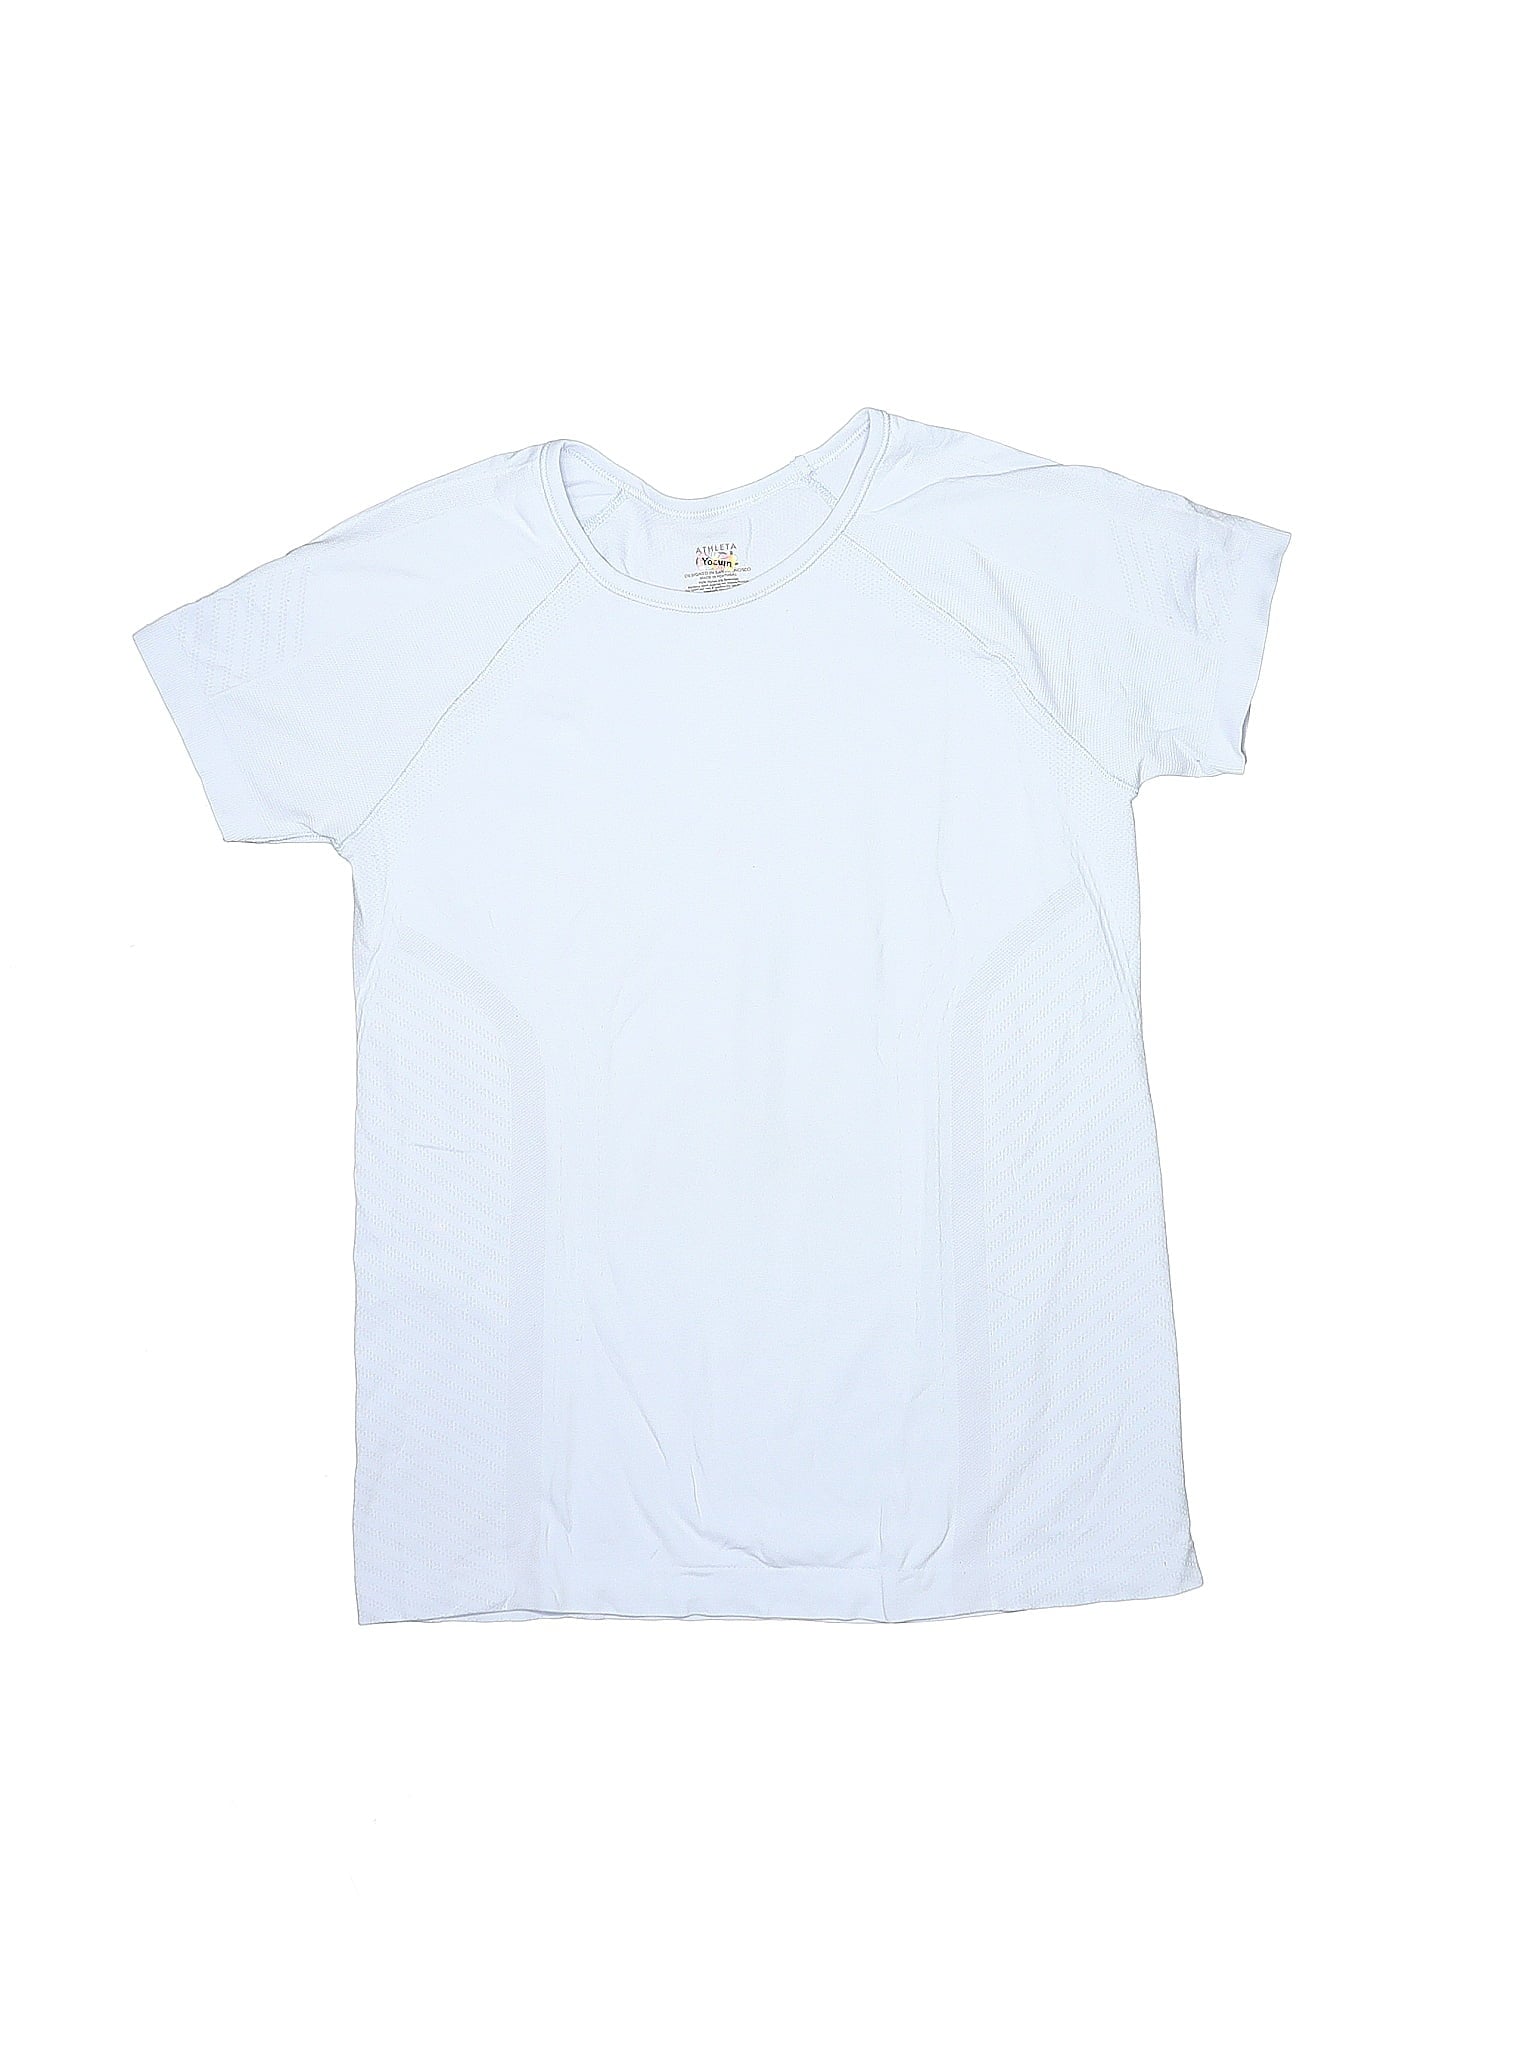 Short Sleeve T Shirt size - X-Large (Tots)